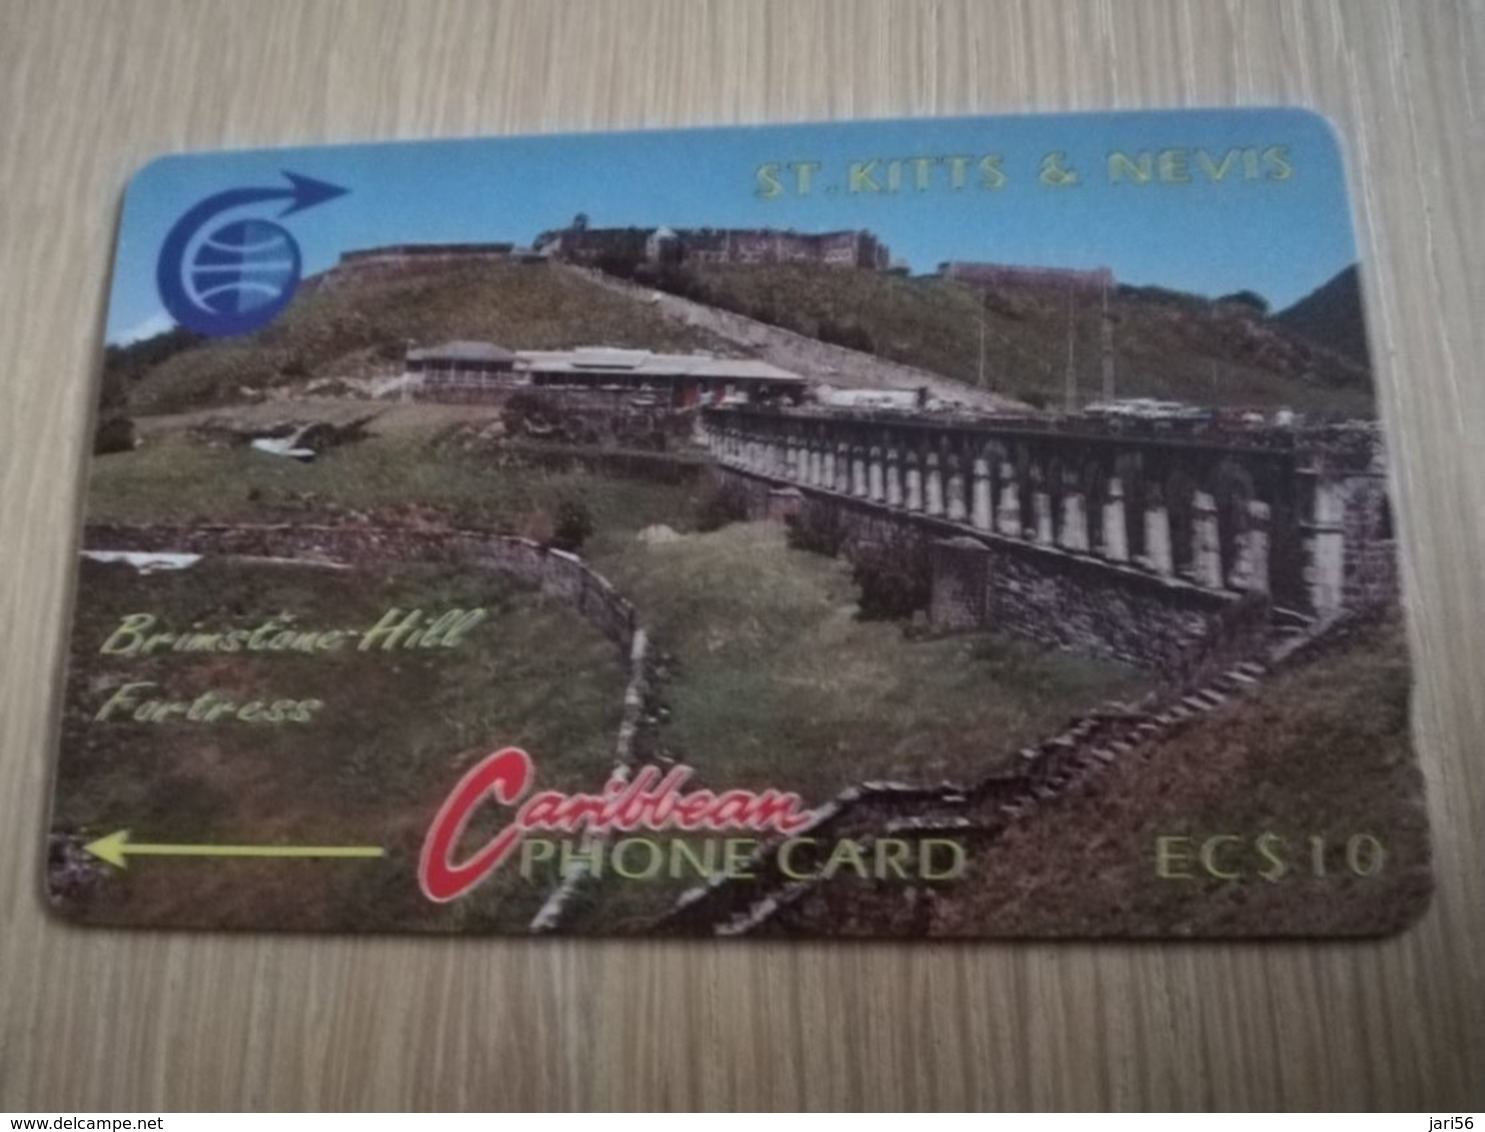 ST KITTS & NEVIS   GPT CARD $10,-   3CSKA     NO STK-3A    BRIMSTONE HILL    Fine Used Card  **2327** - St. Kitts & Nevis